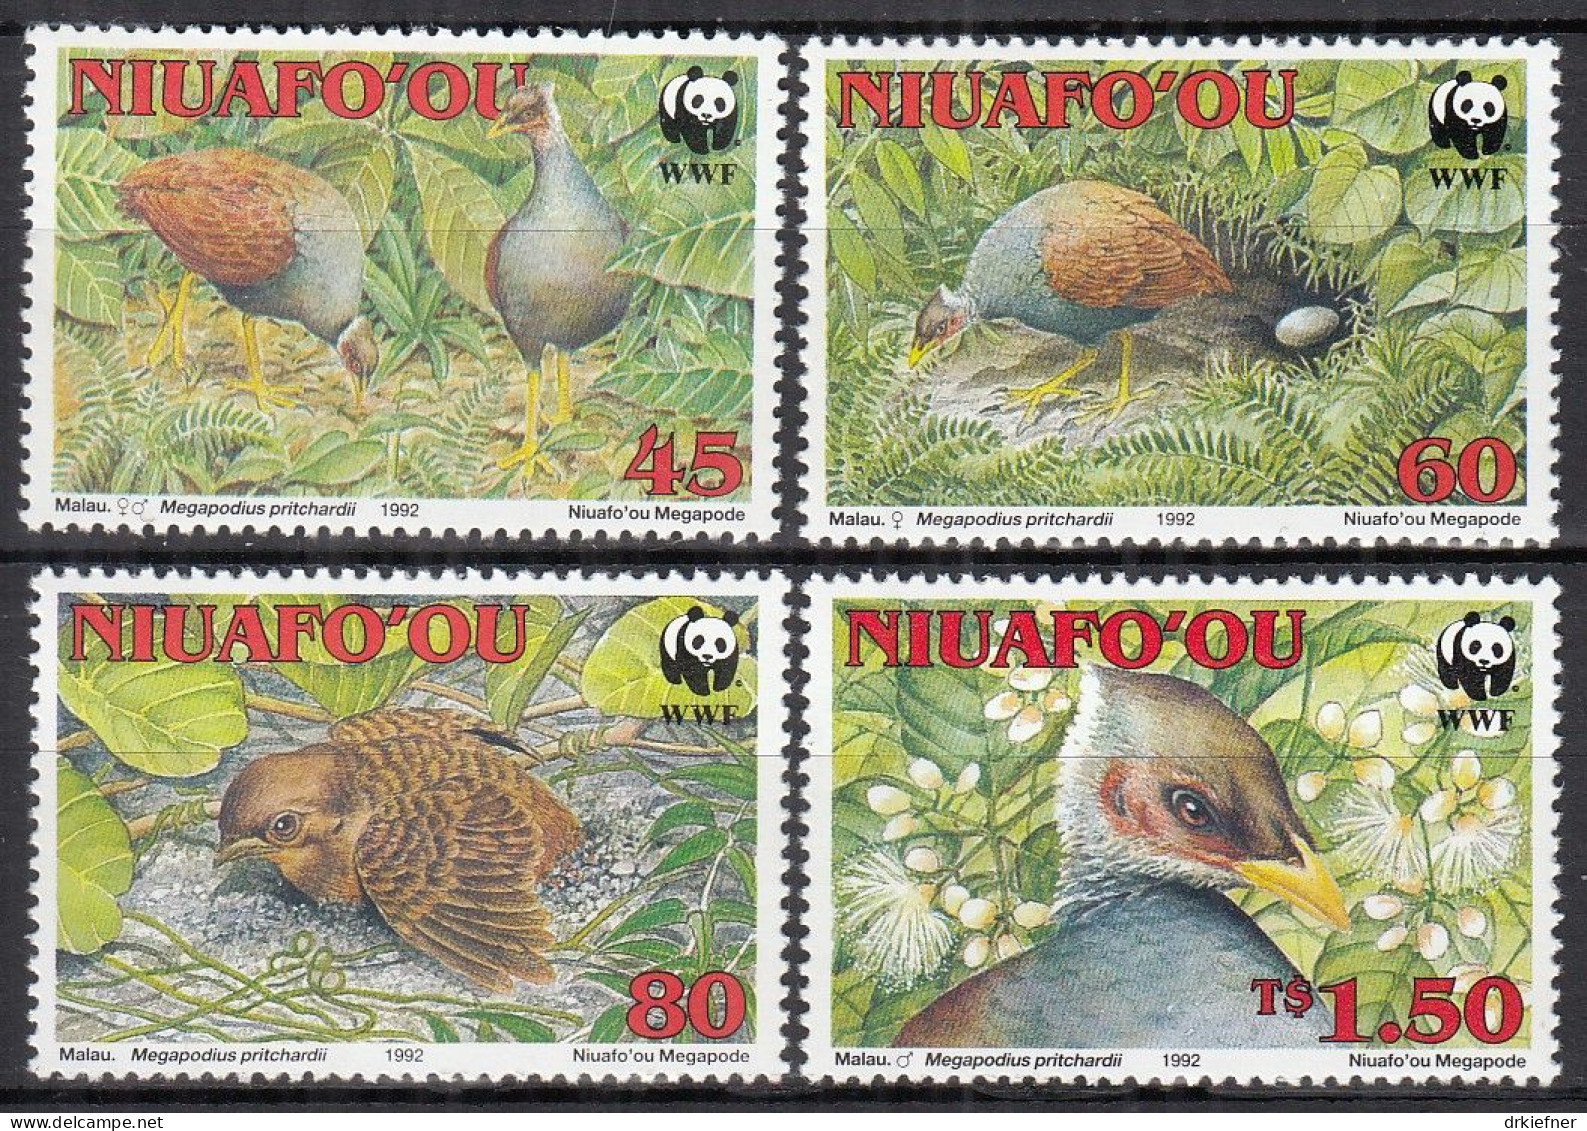 NIUAFO'OU INSEL, Tonga  233-236, Postfrisch **, WWF, Weltweiter Naturschutz: Pritchard-Dschungelhuhn, 1992 - Tonga (1970-...)